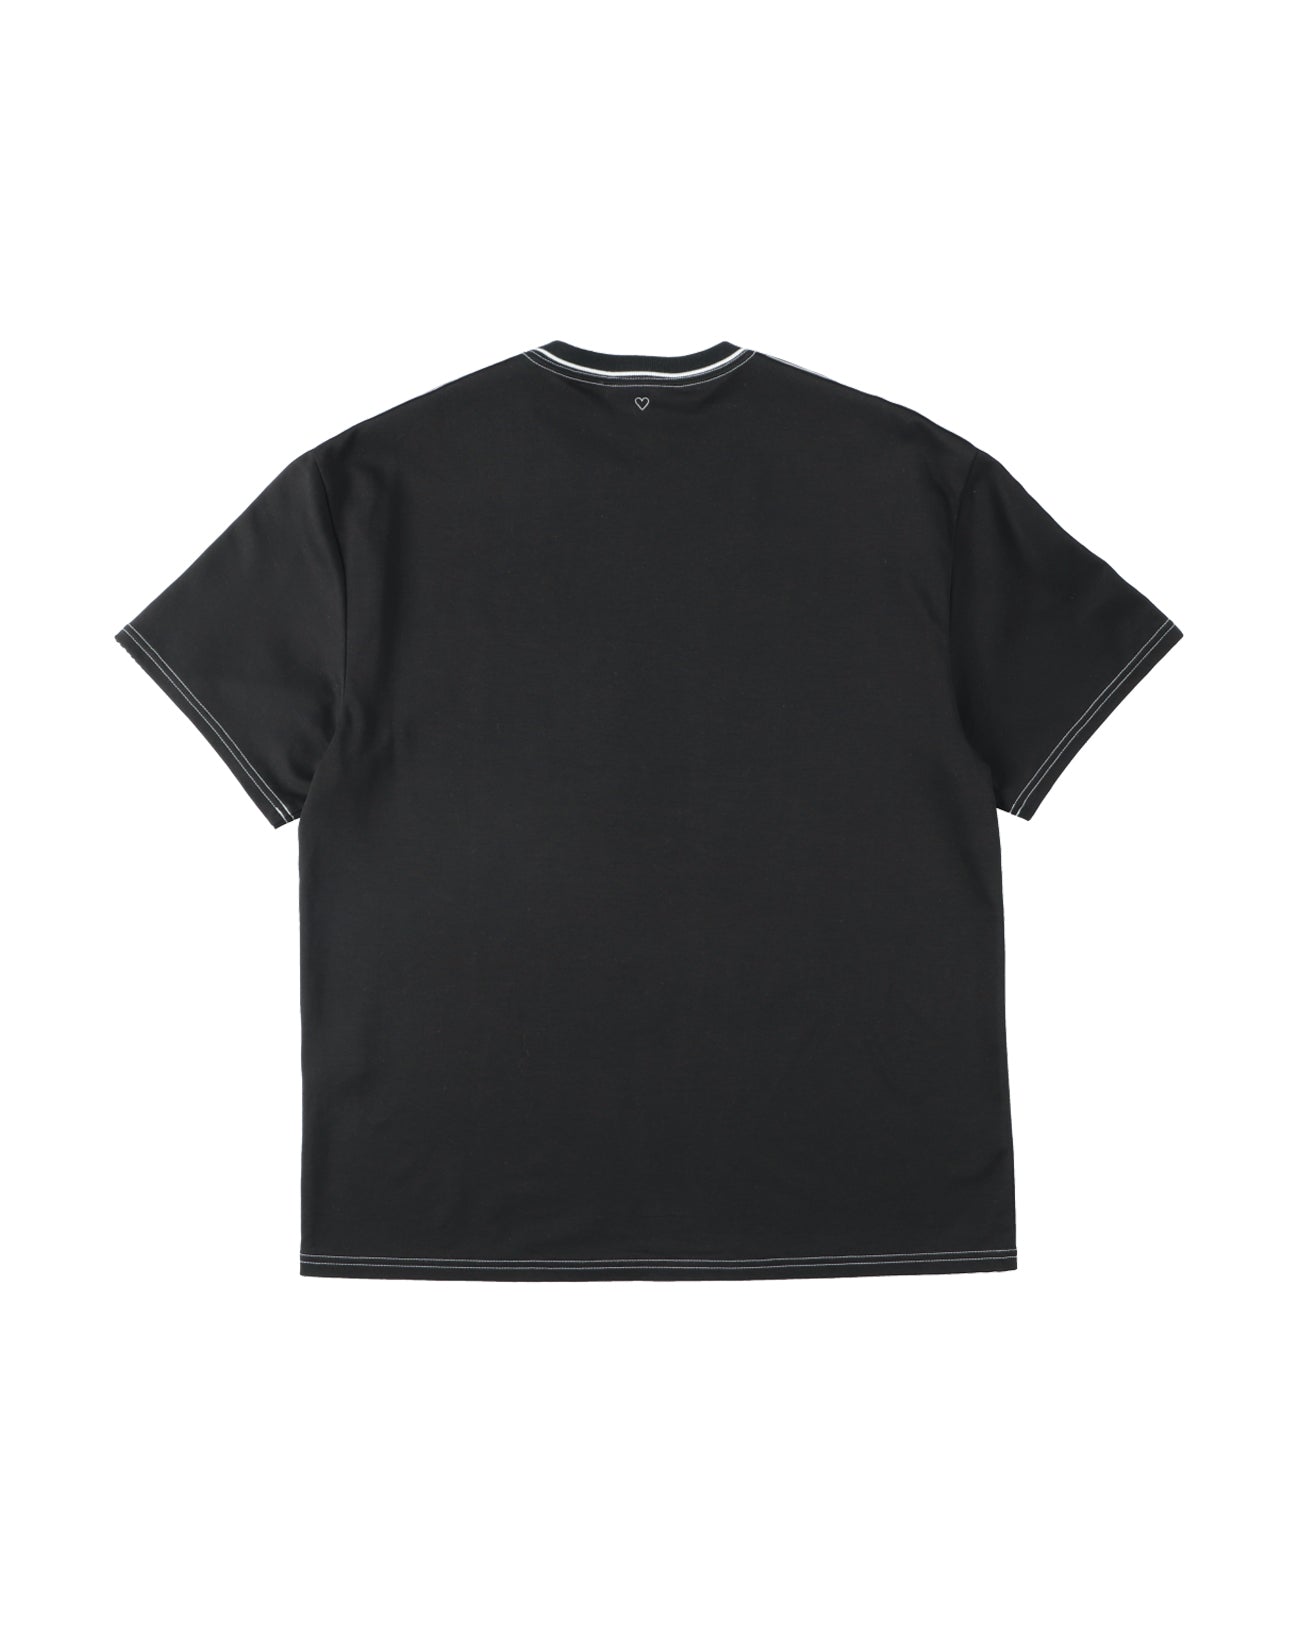 x UMBRO Uniform T-shirt - black - FAB4 ONLINE STORE